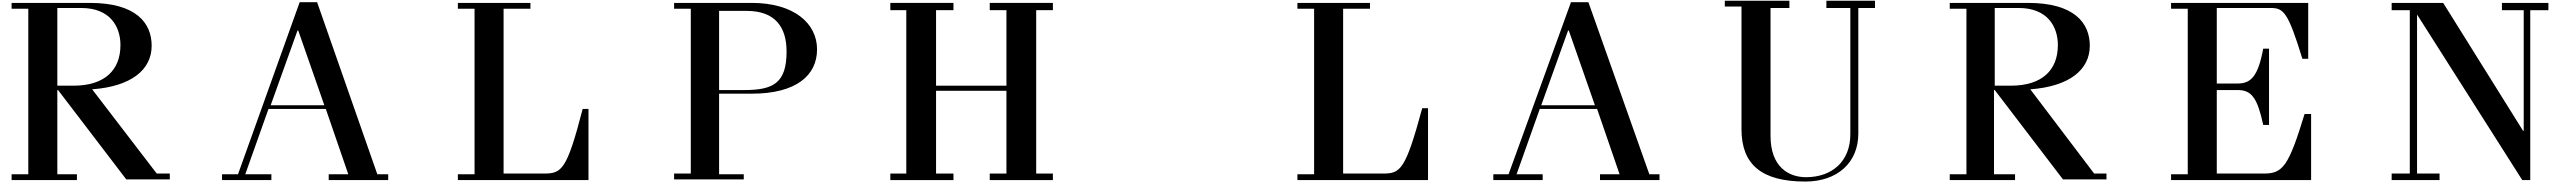 Archivo:Ralph Lauren logo.svg - Wikipedia, la enciclopedia libre